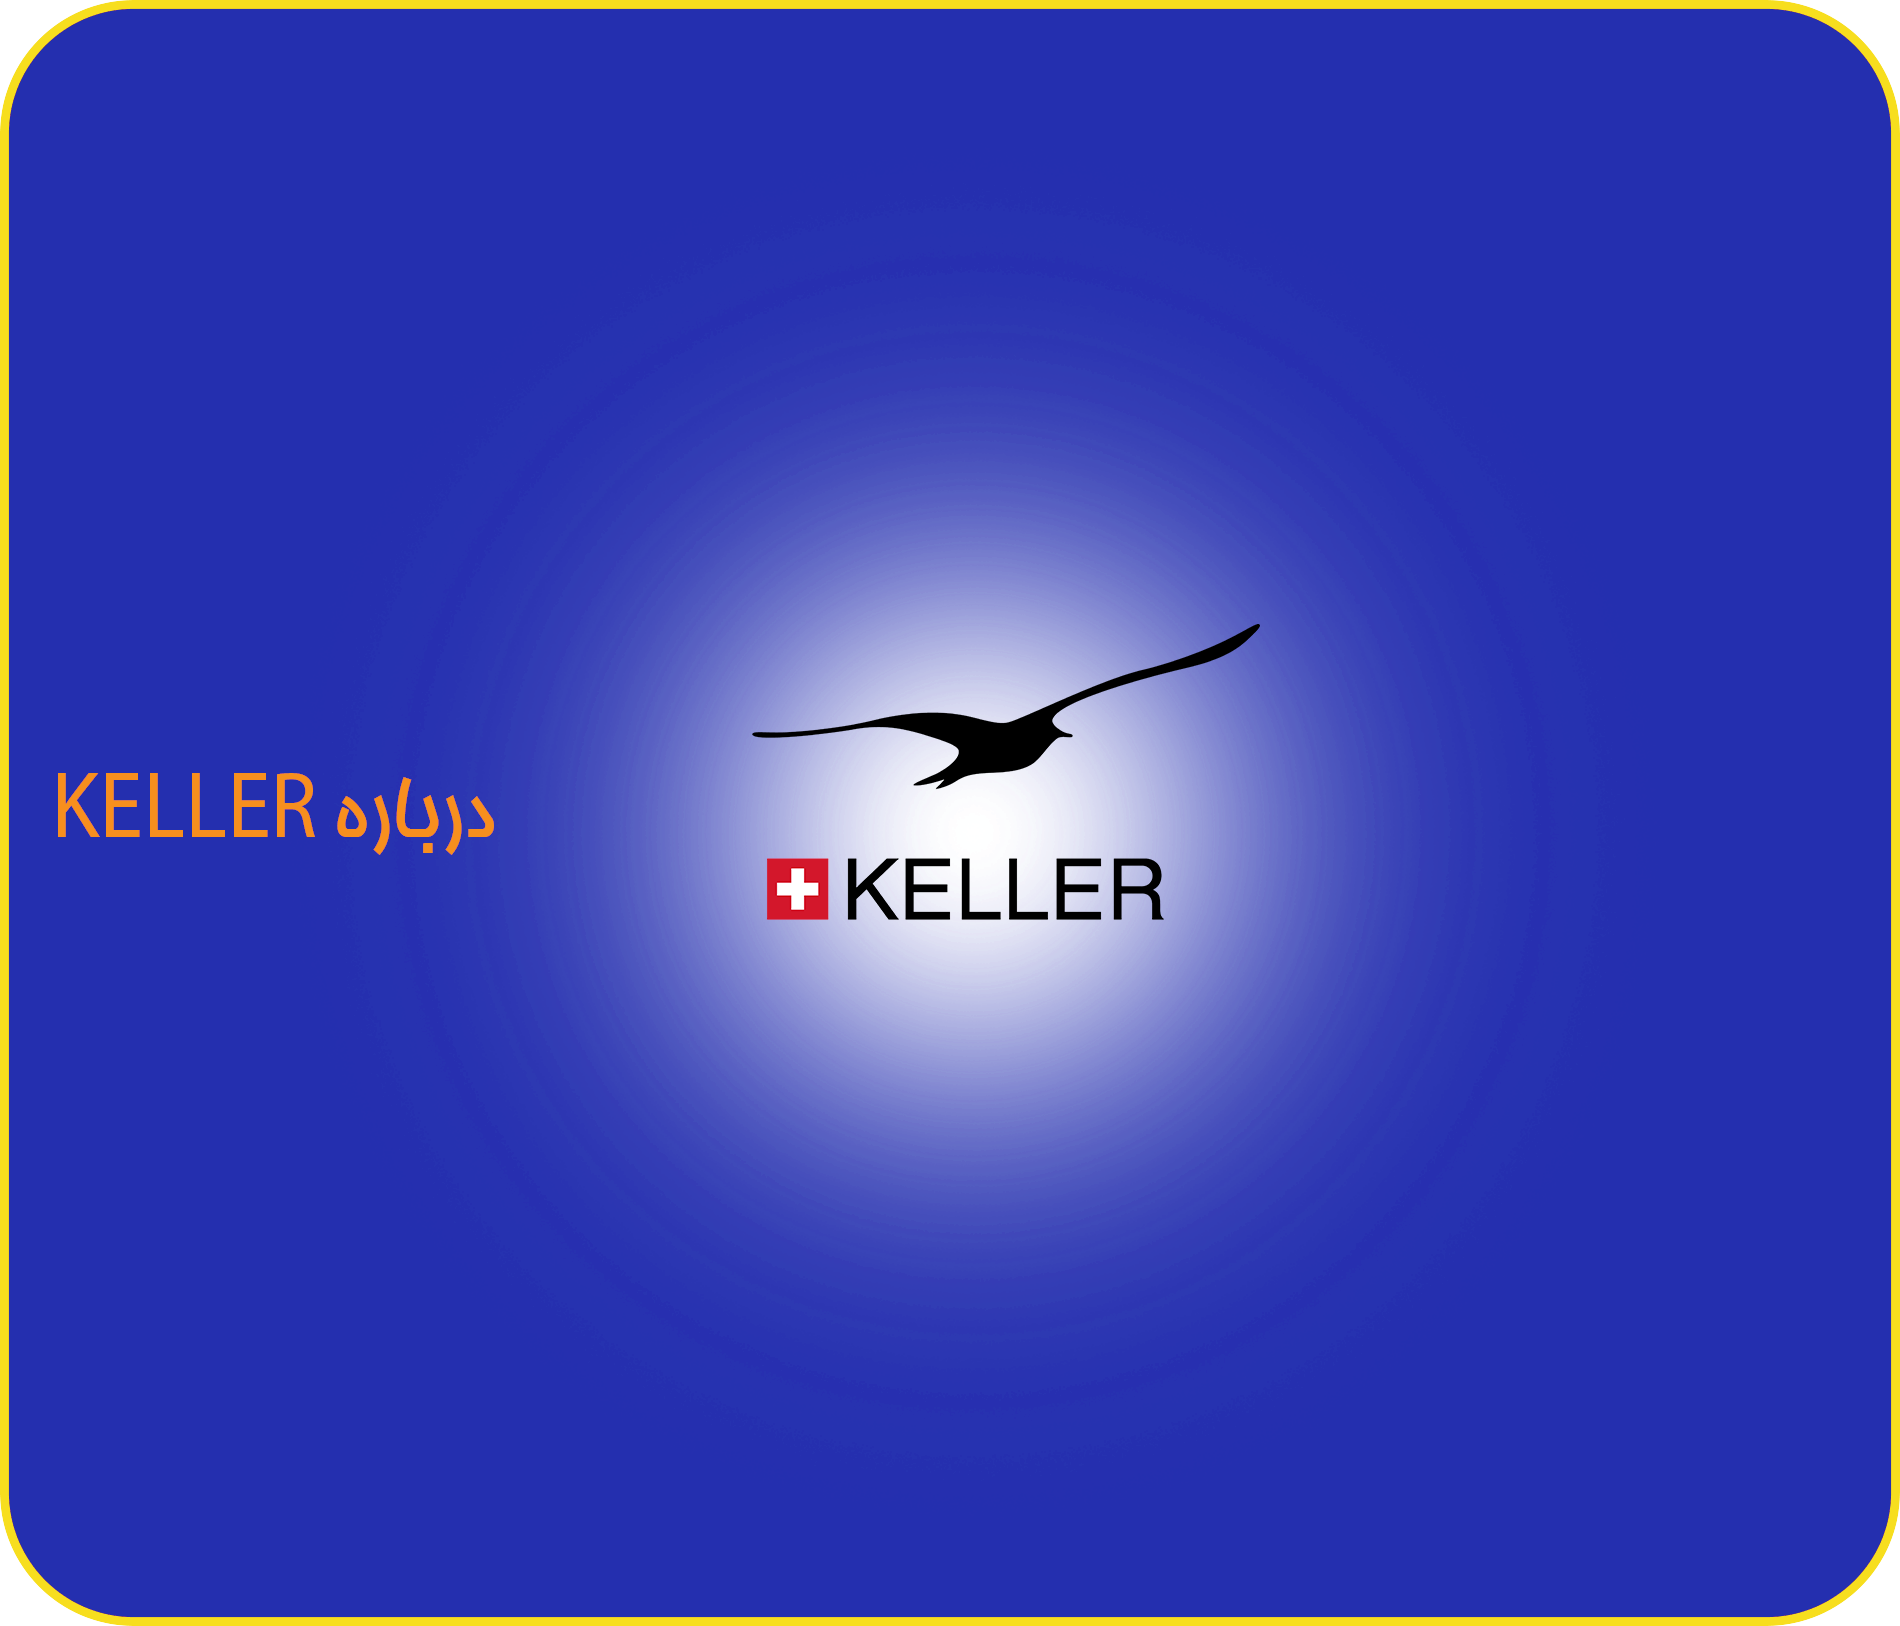 about KELLER